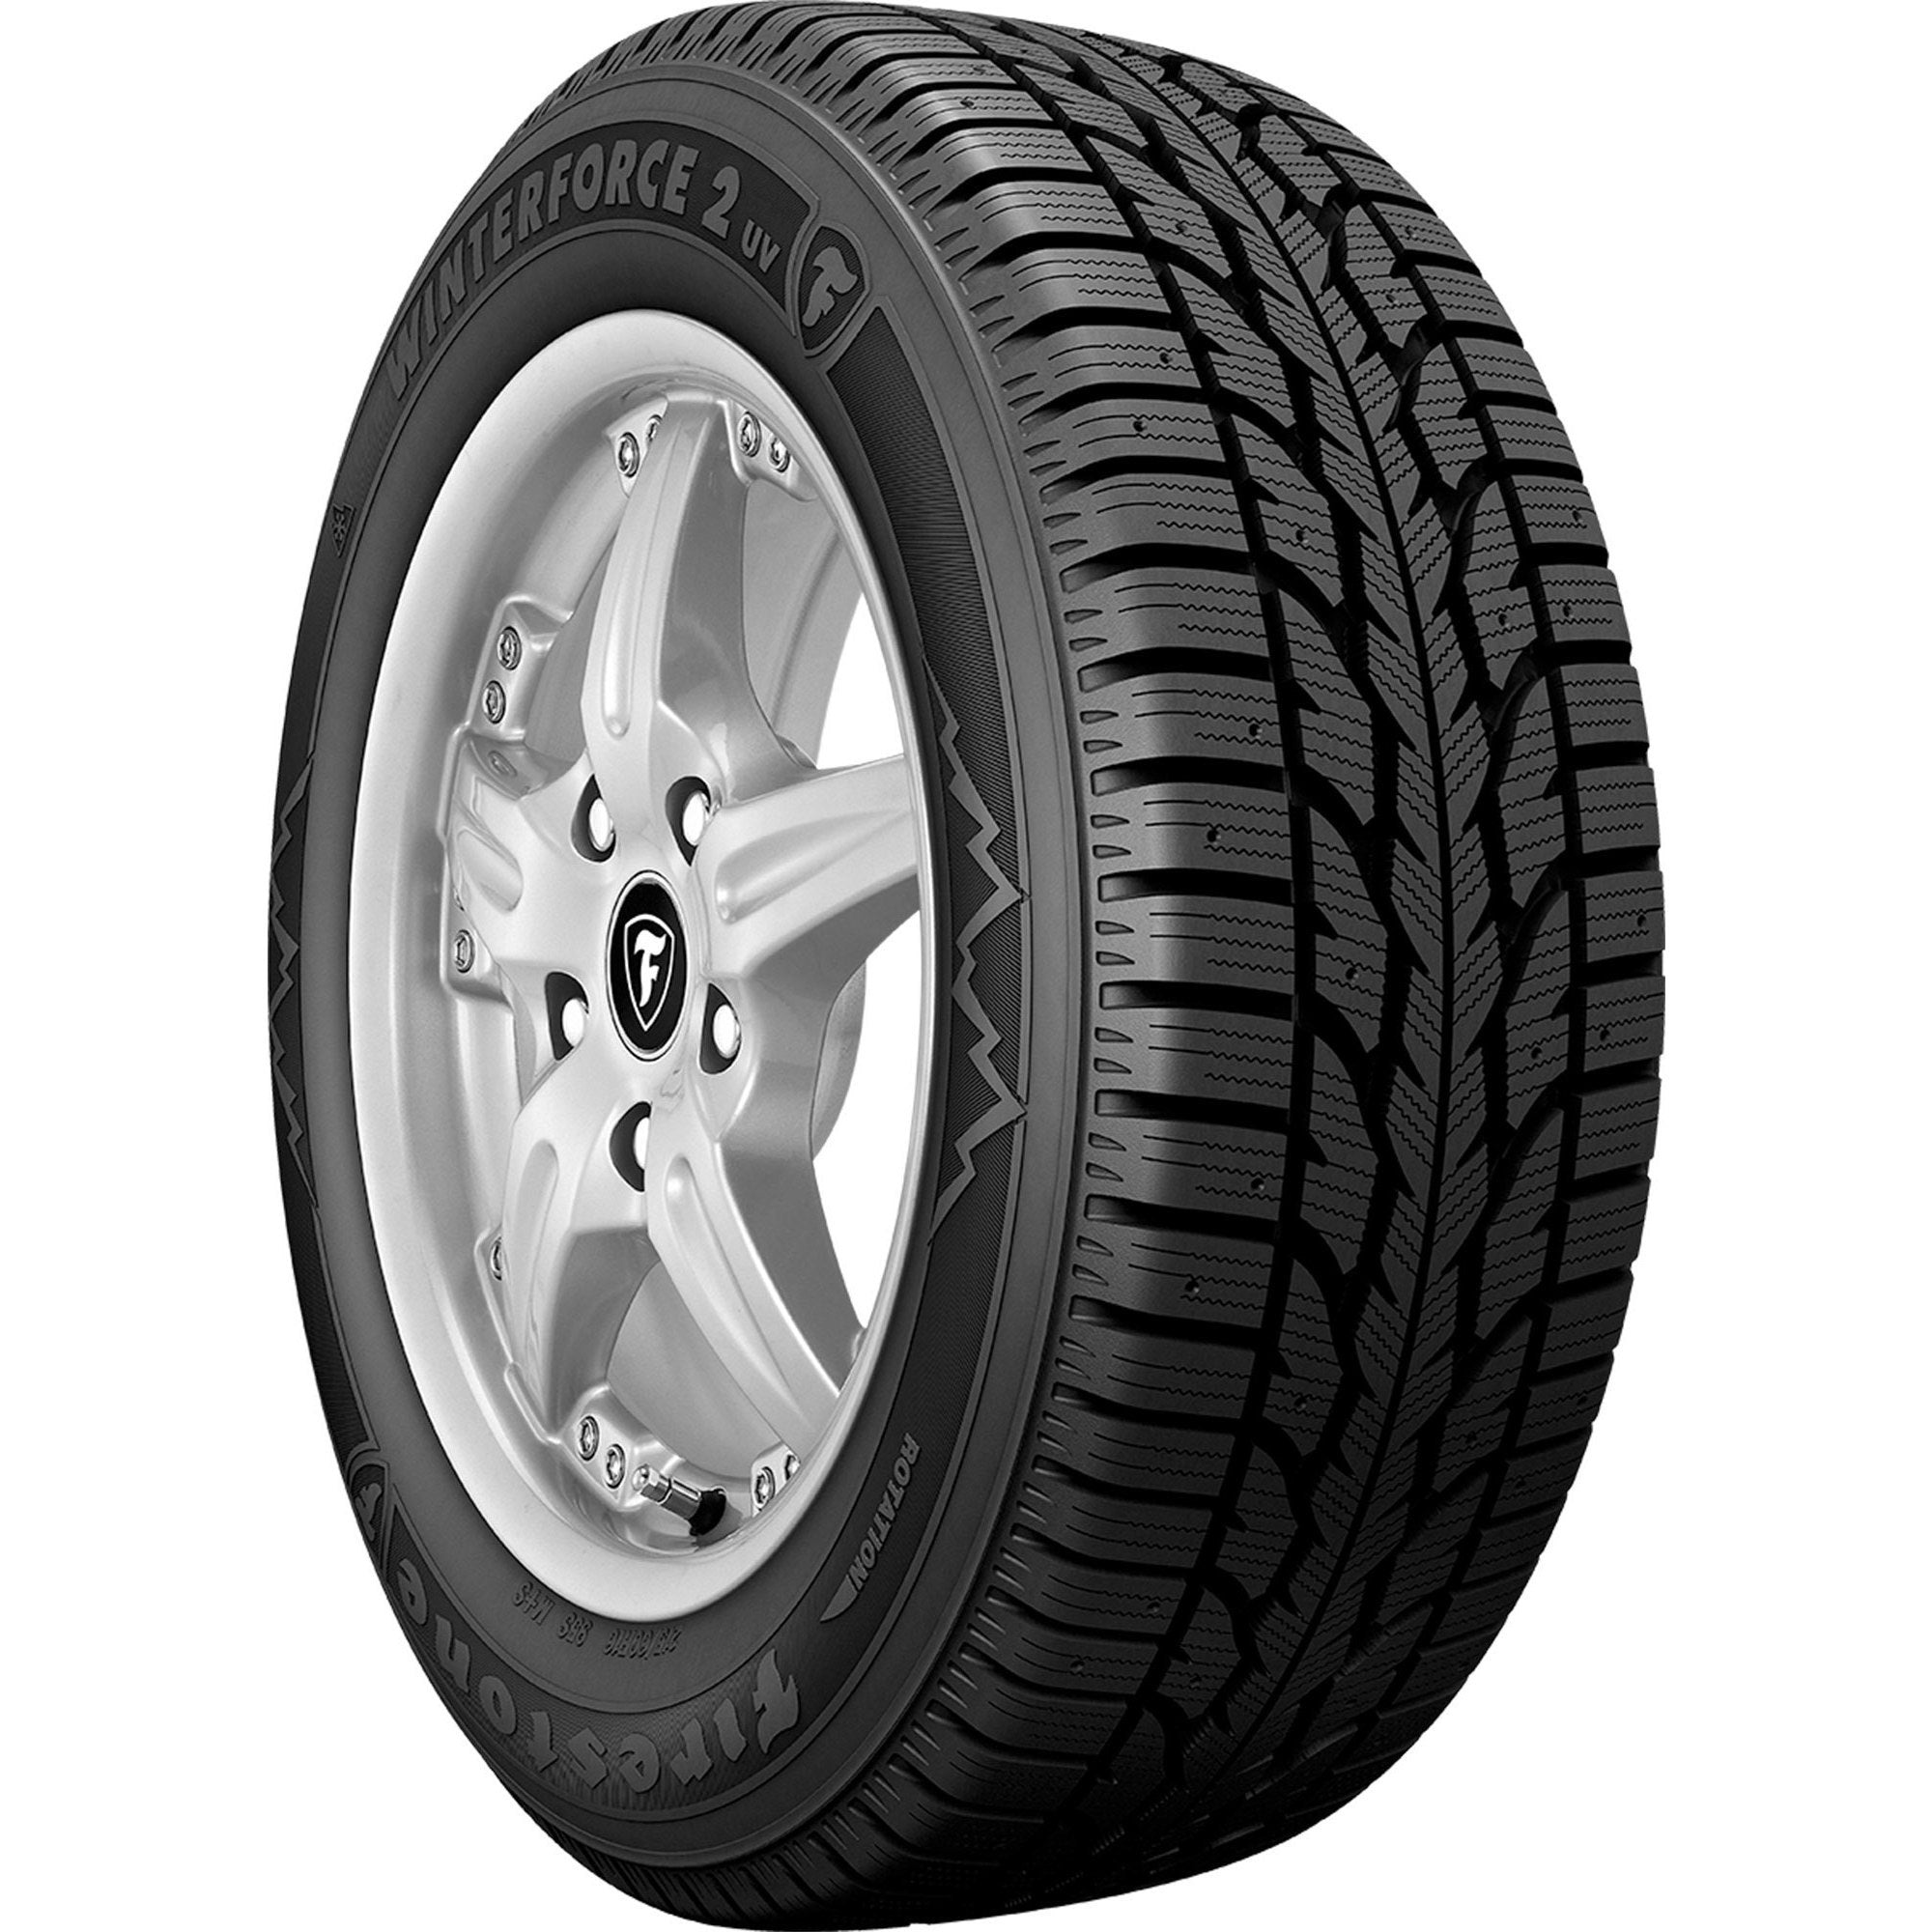 FIRESTONE WINTERFORCE2 UV P215/75R15 (27.7X8.5R 15) Tires